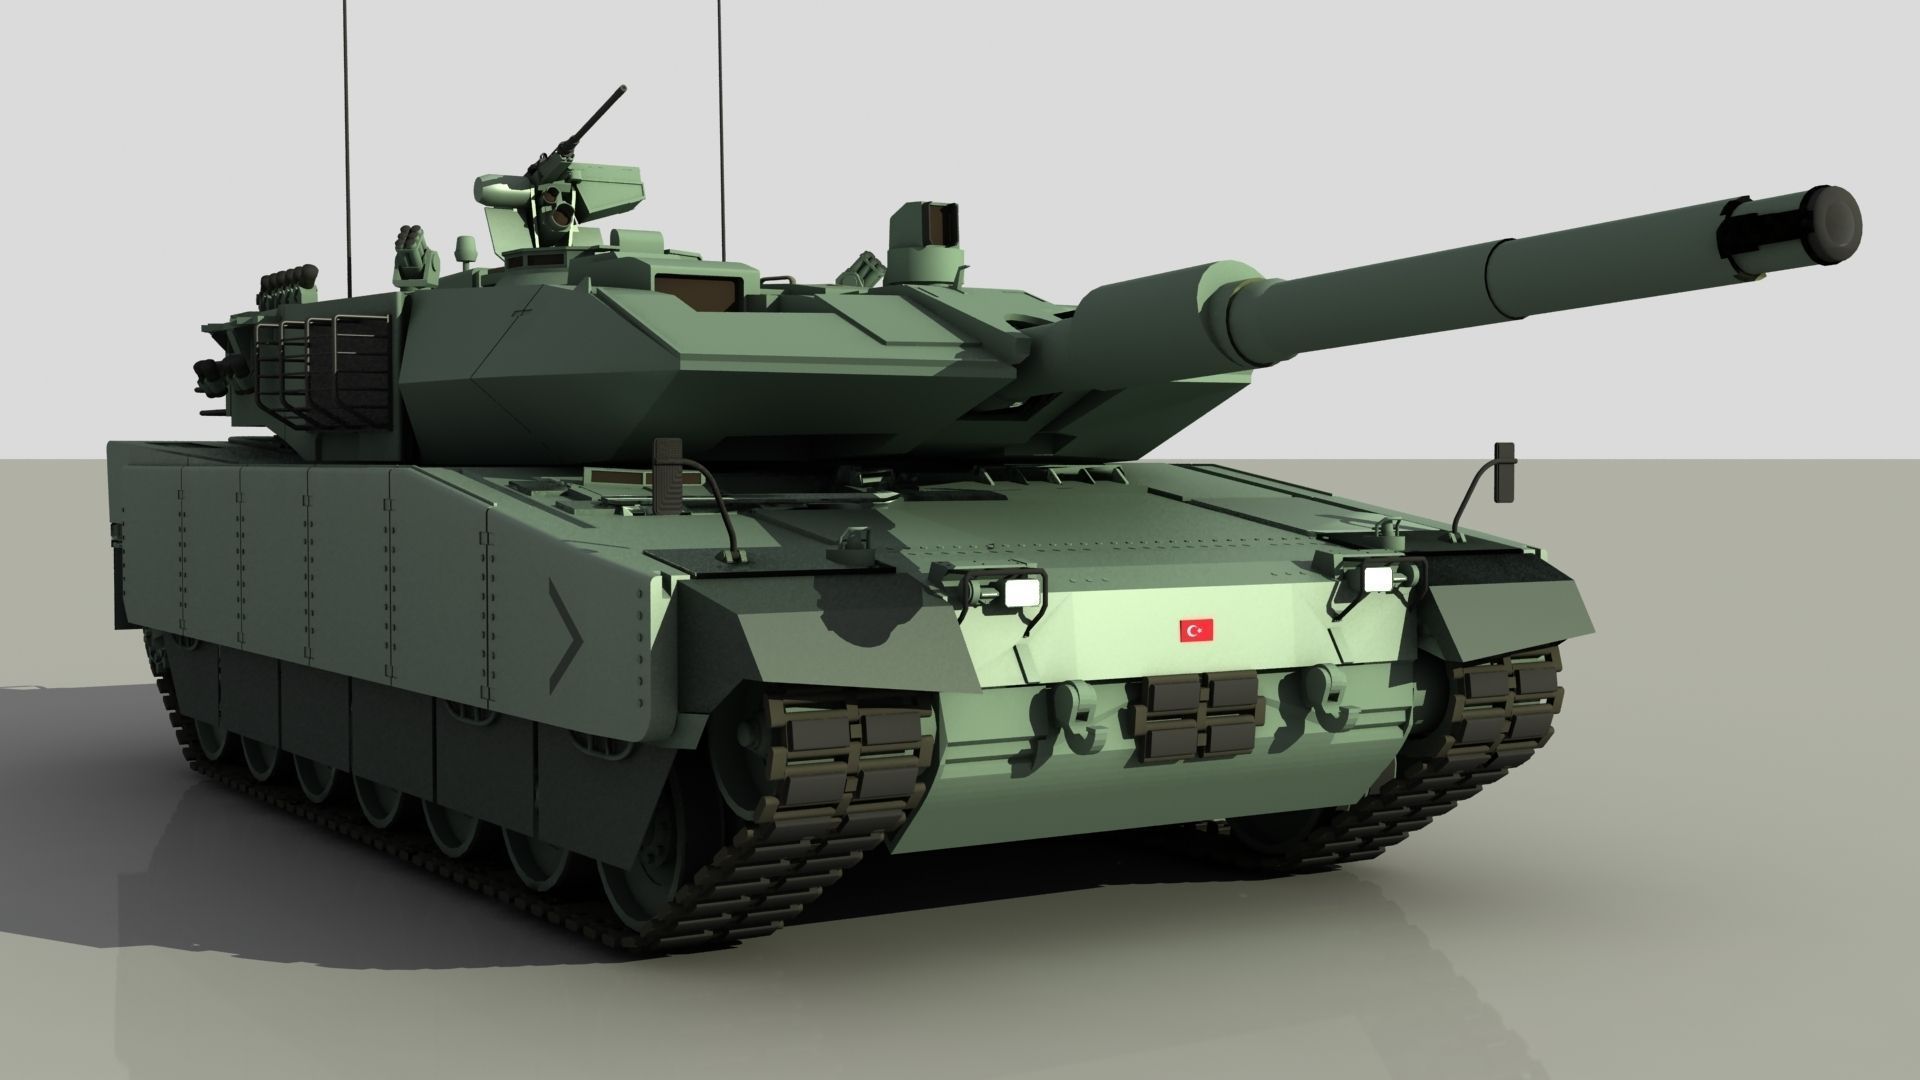 turkish_main_battle_tank_altay_3d_model_obj_max_0a55c168-359b-4327-bae4-2ab2c3e196f4.jpg